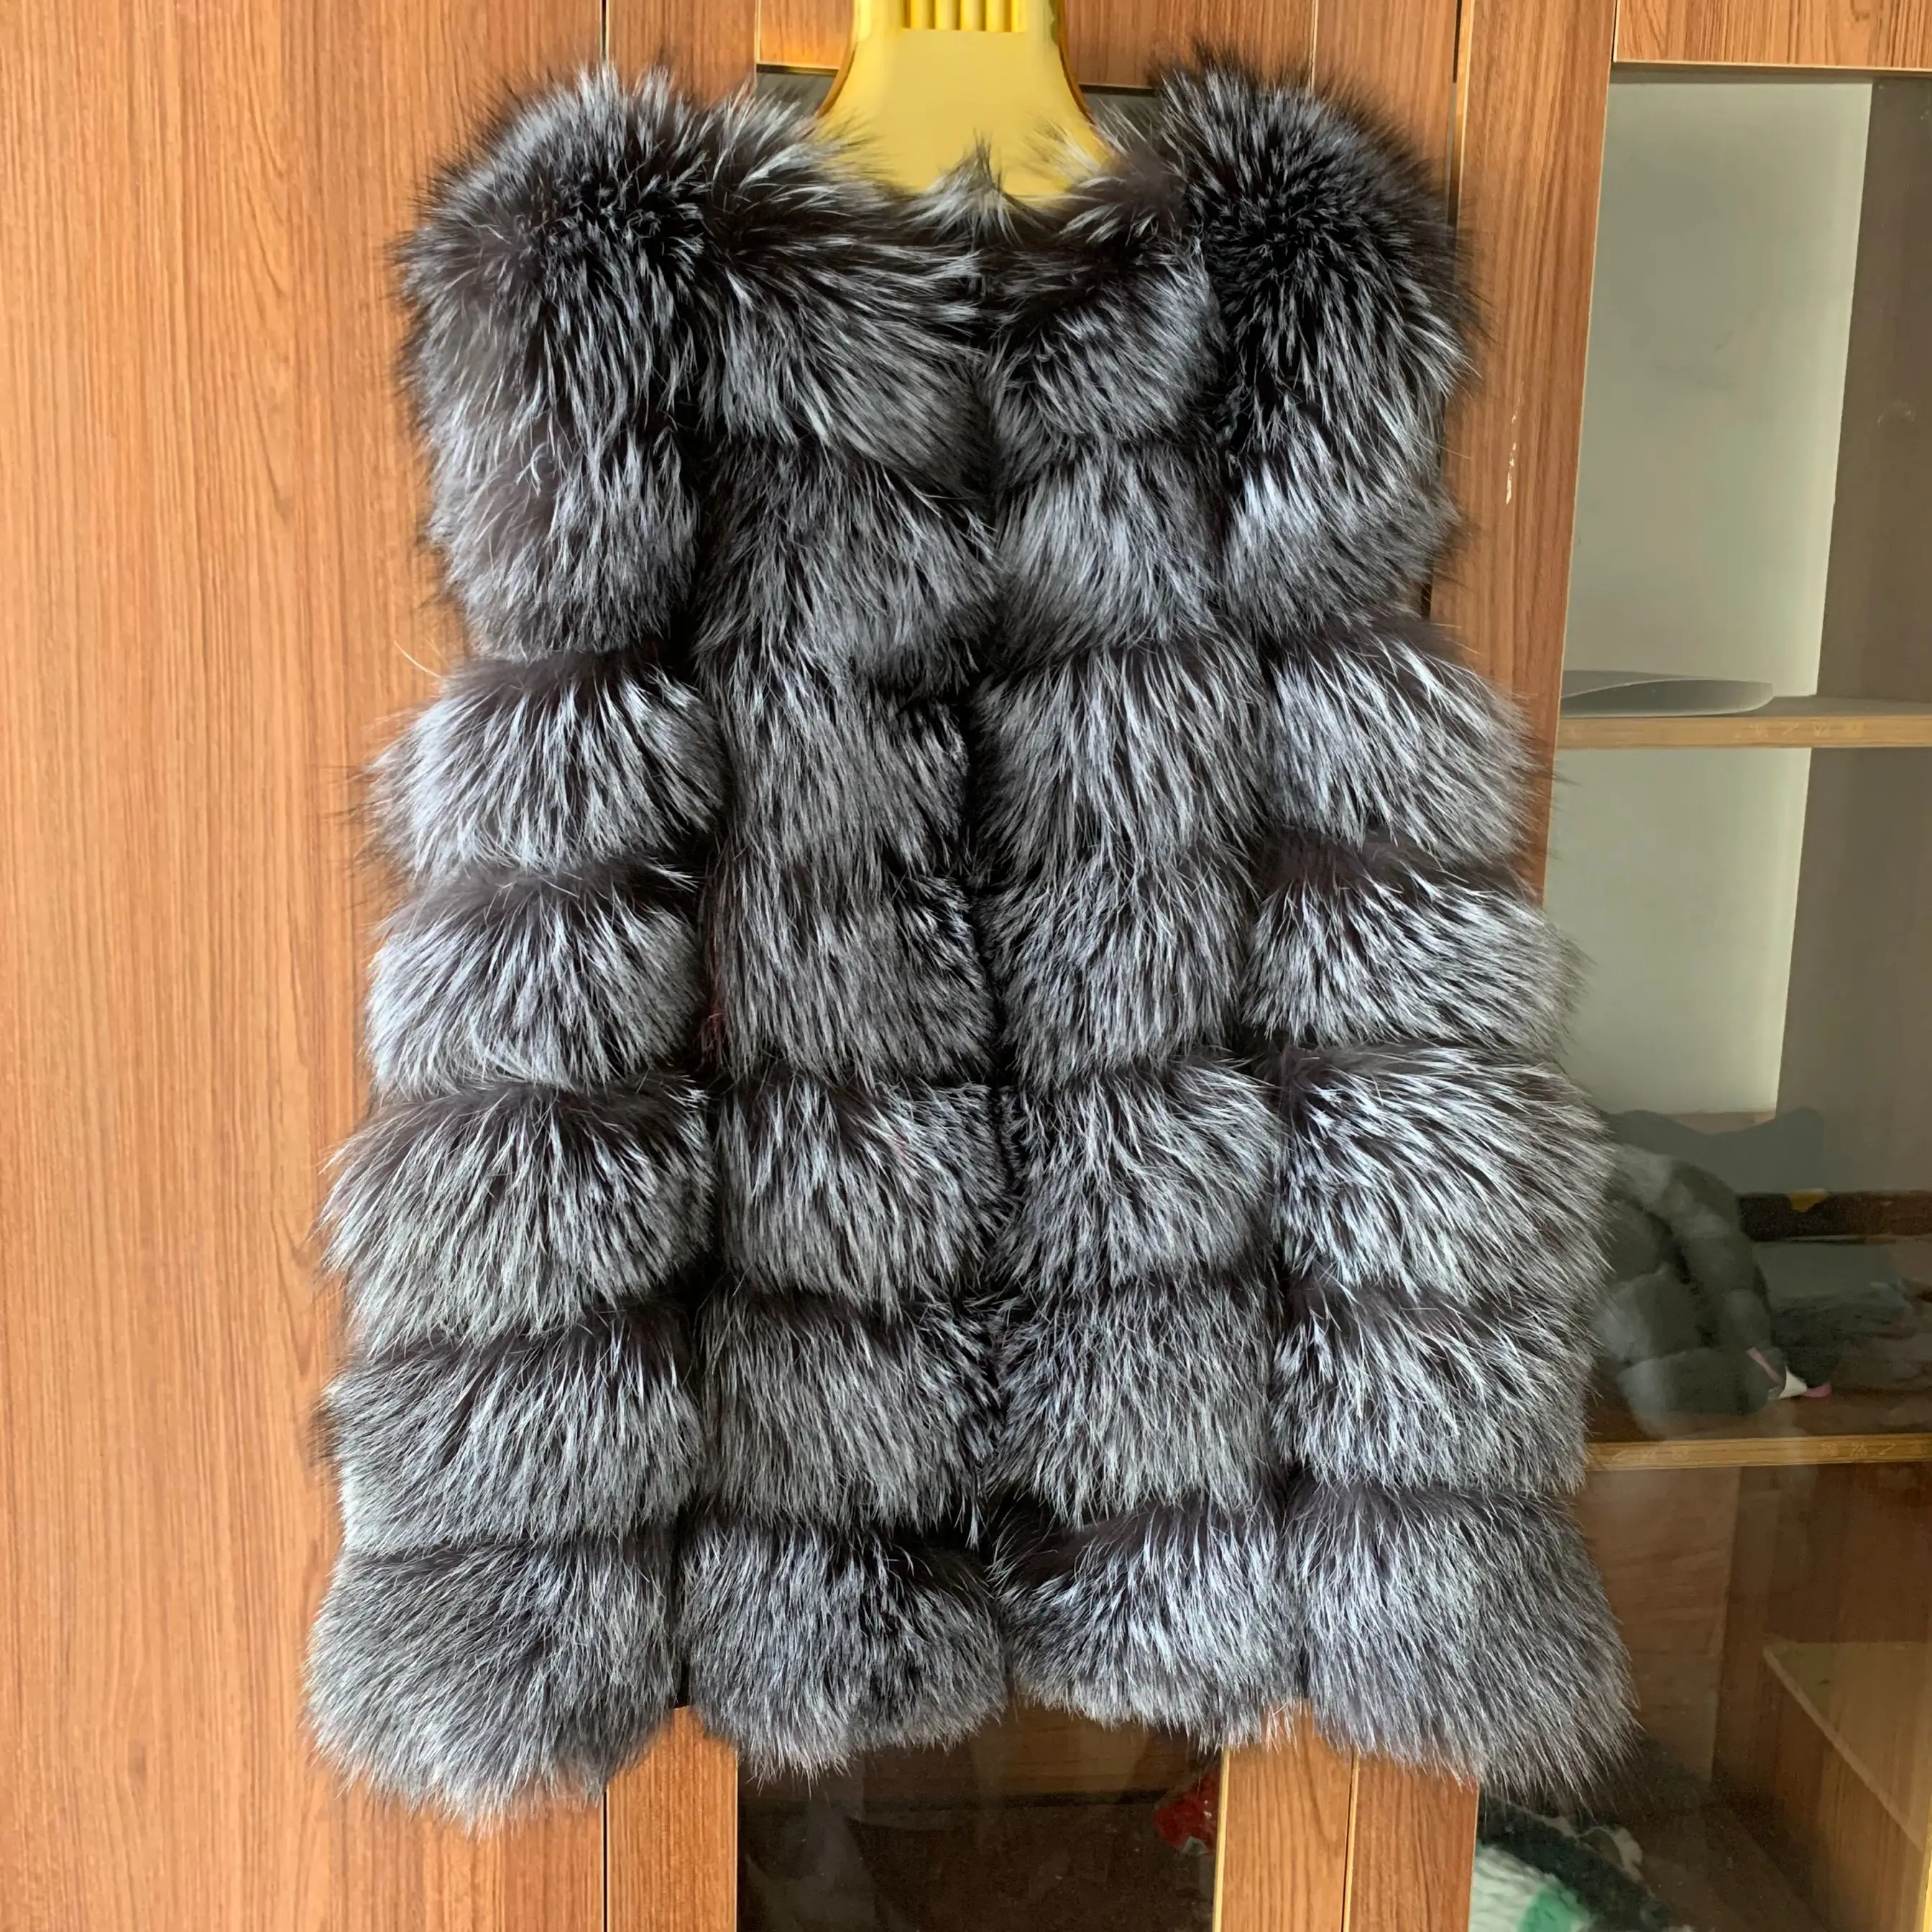 Fox fur coat women Autumn and winter vests genuine fur coat Natural fur Silver fox jacket Raccoon fur vest jacket free shipping enlarge